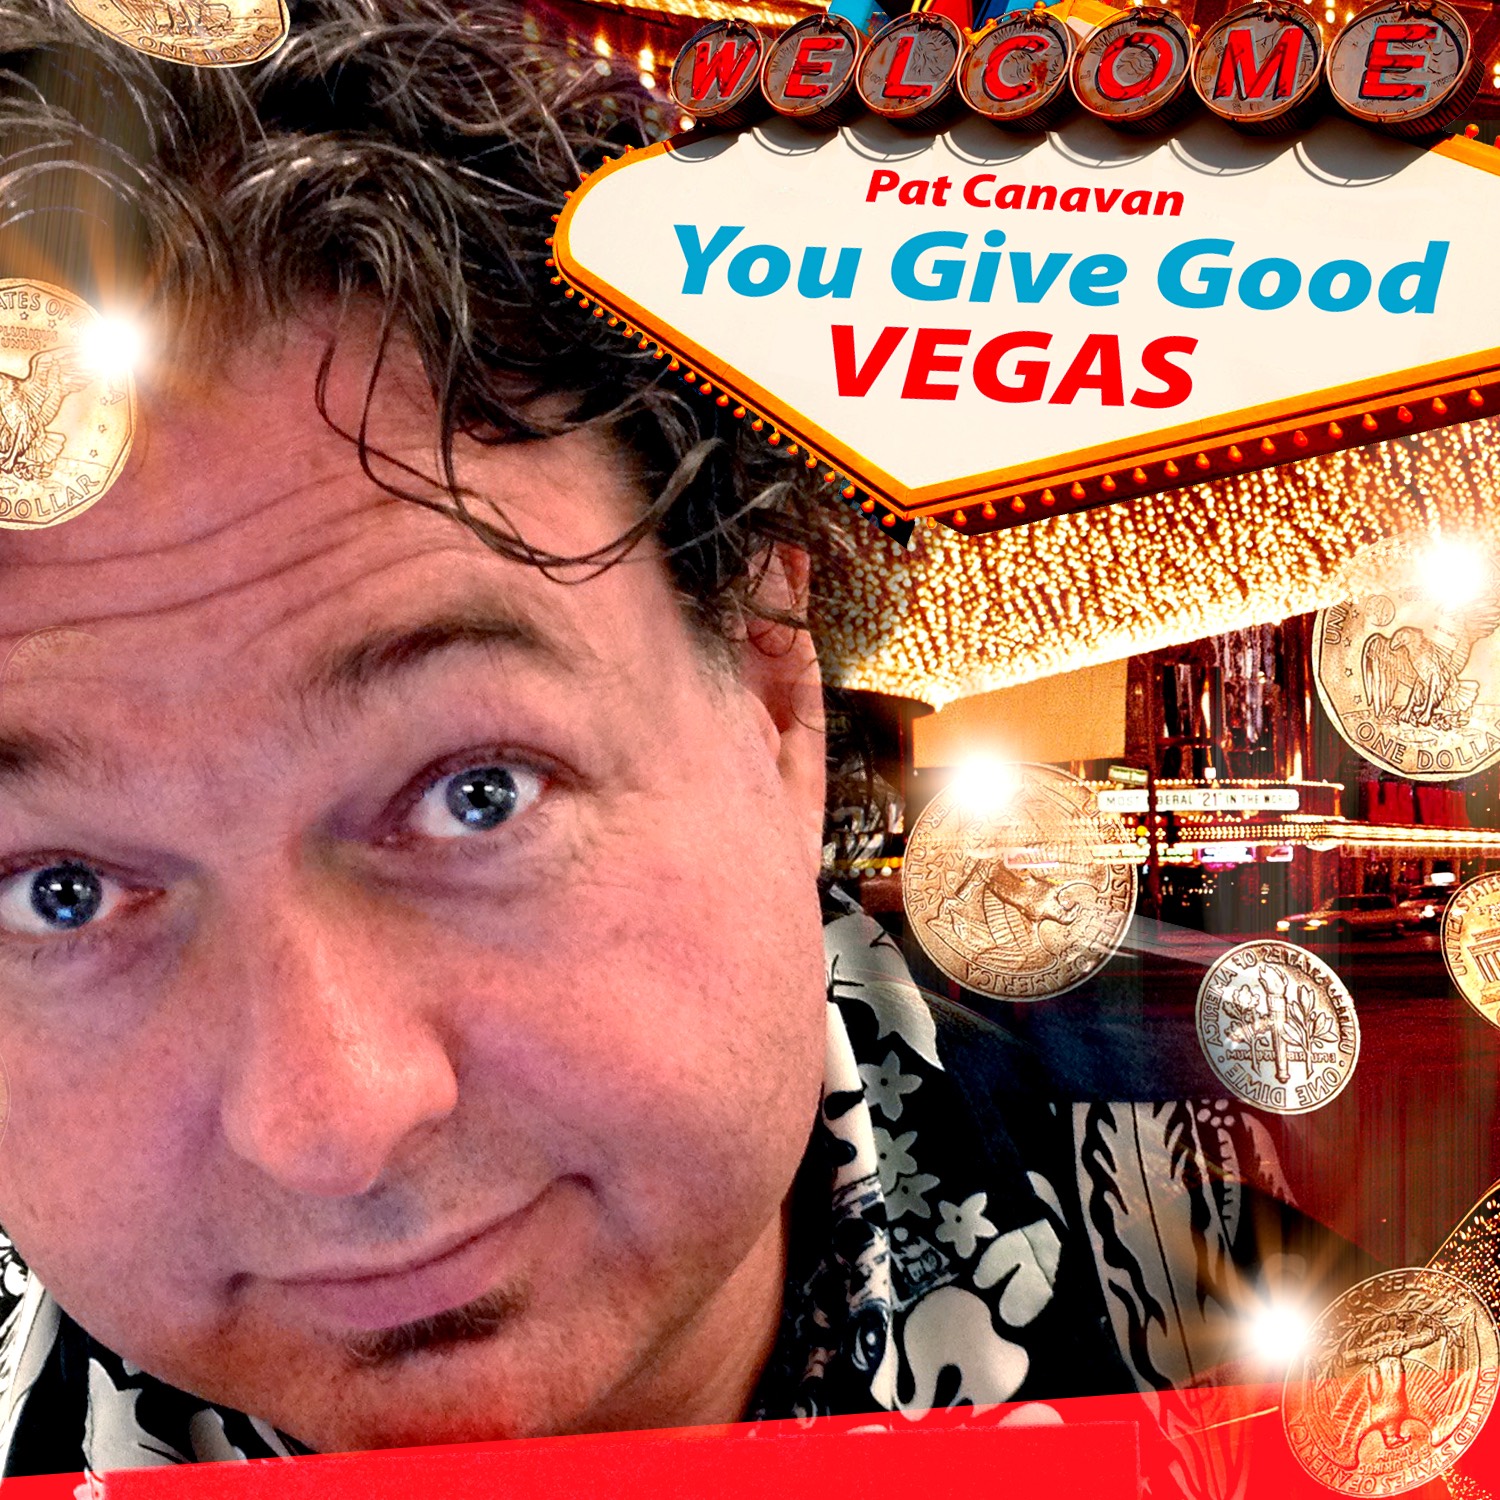 Album Cover Art - You Give Good Vegas (1500x1500 px)